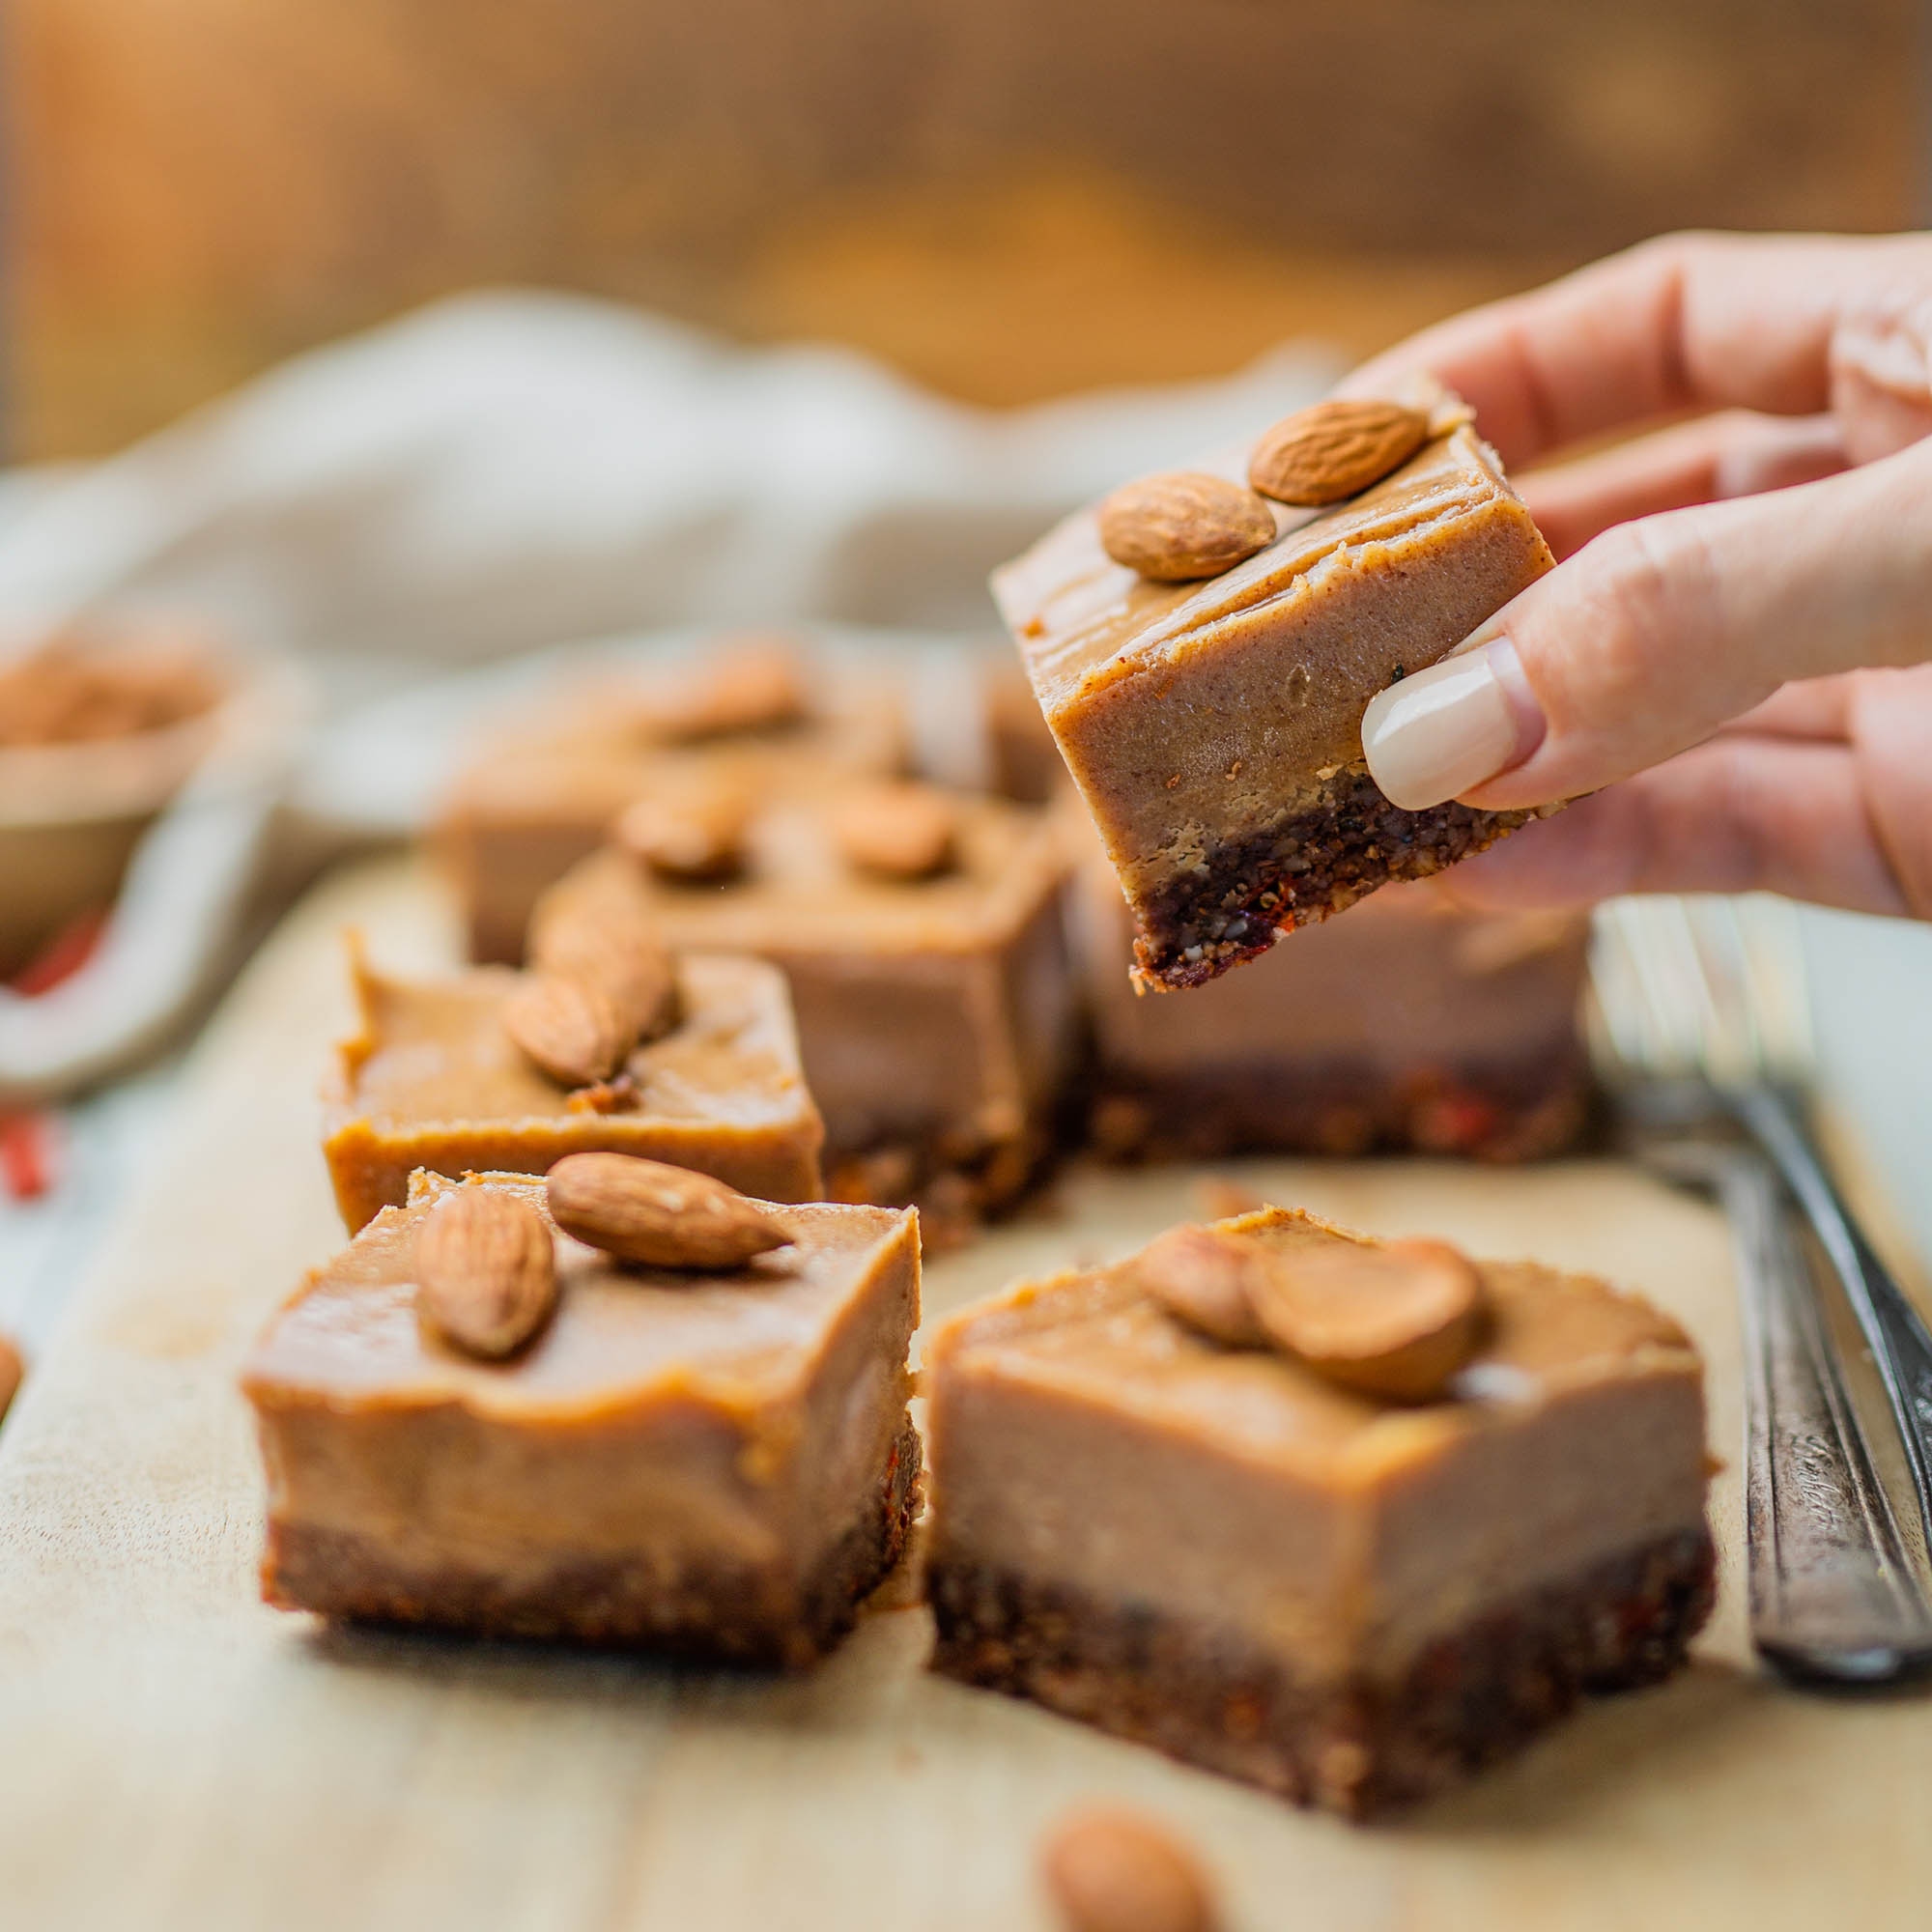 Vegan Toffee Almond Slice – No Dates